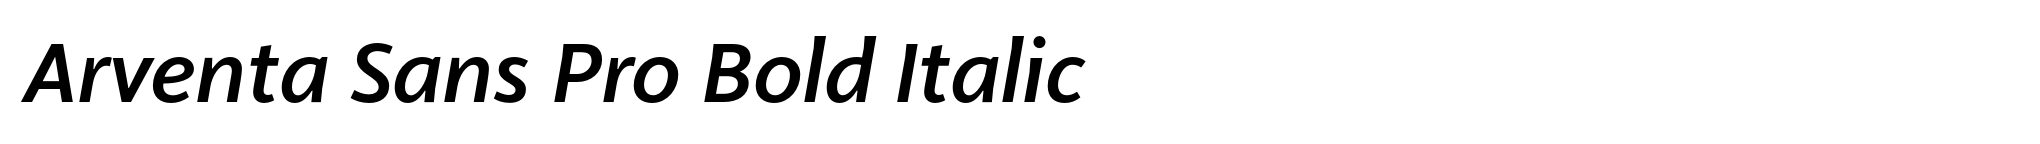 Arventa Sans Pro Bold Italic image